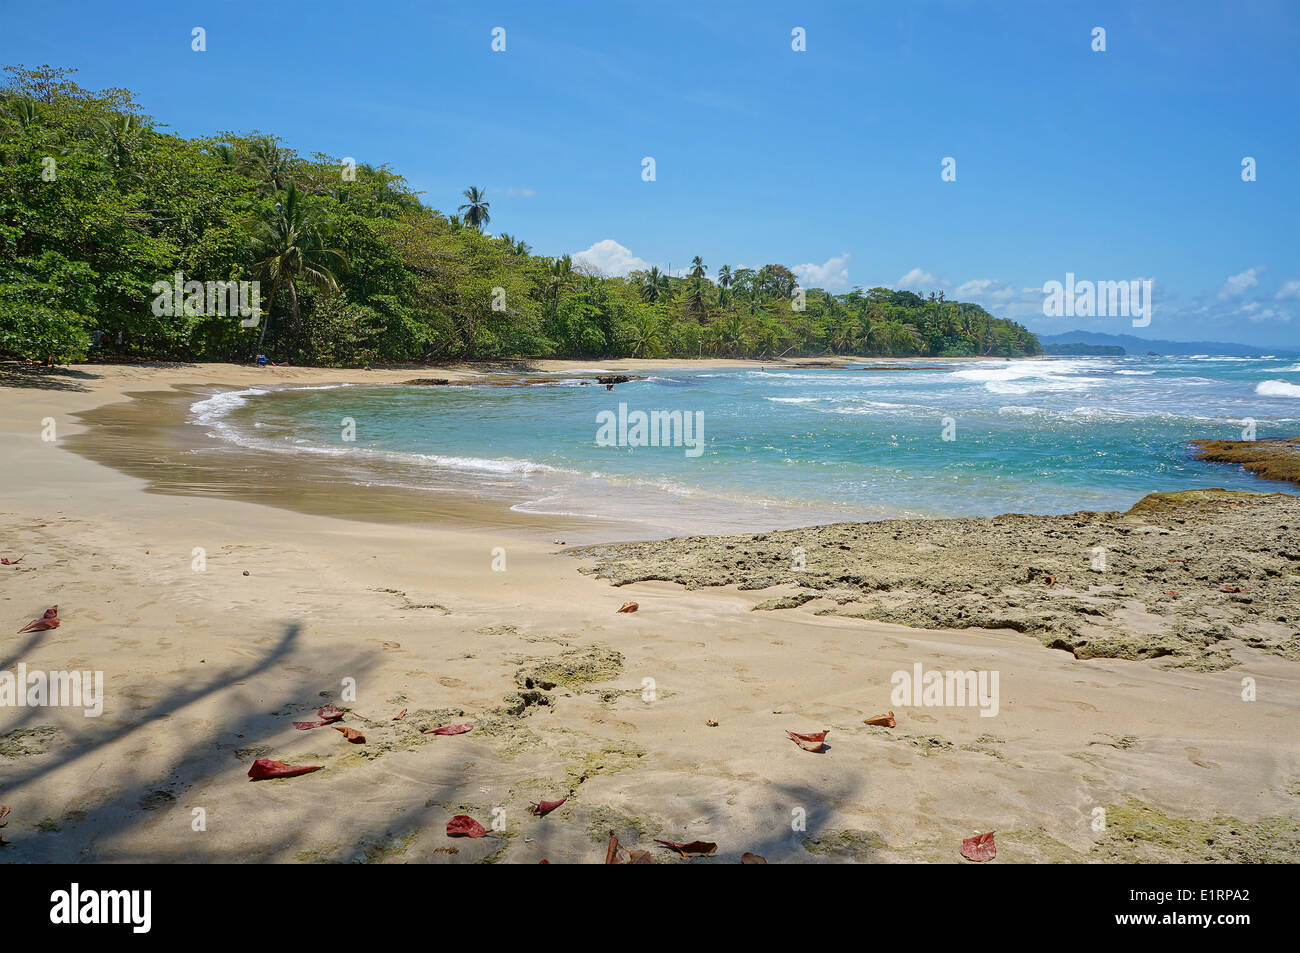 Caribbean beach of Costa Rica, playa Chiquita, Puerto Viejo de Talamanca Stock Photo